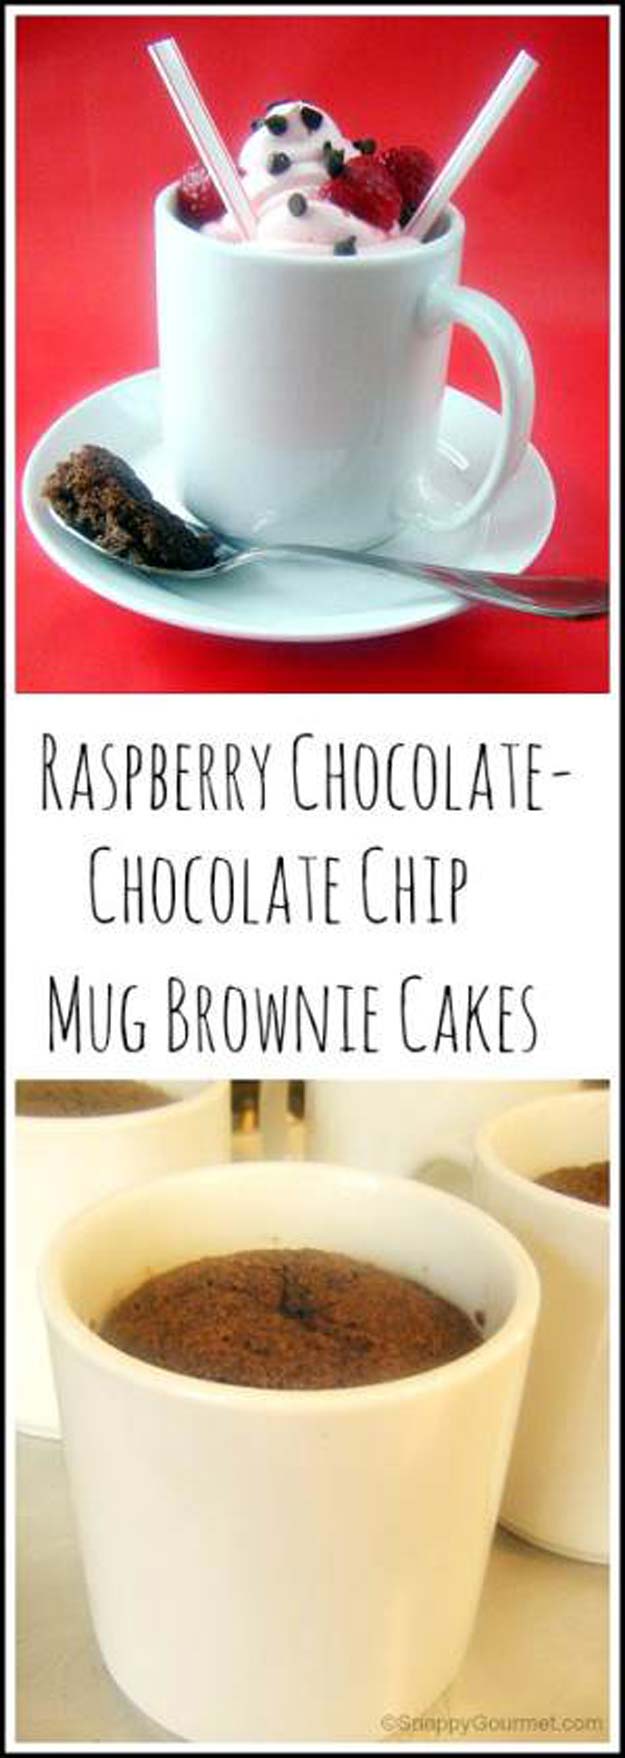 Chocolate Mug Cake Recipes - Raspberry Chocolate-Chocolate Chip Mug Brownie Cakes - Microwave Cake Recipes for Brownies Easy